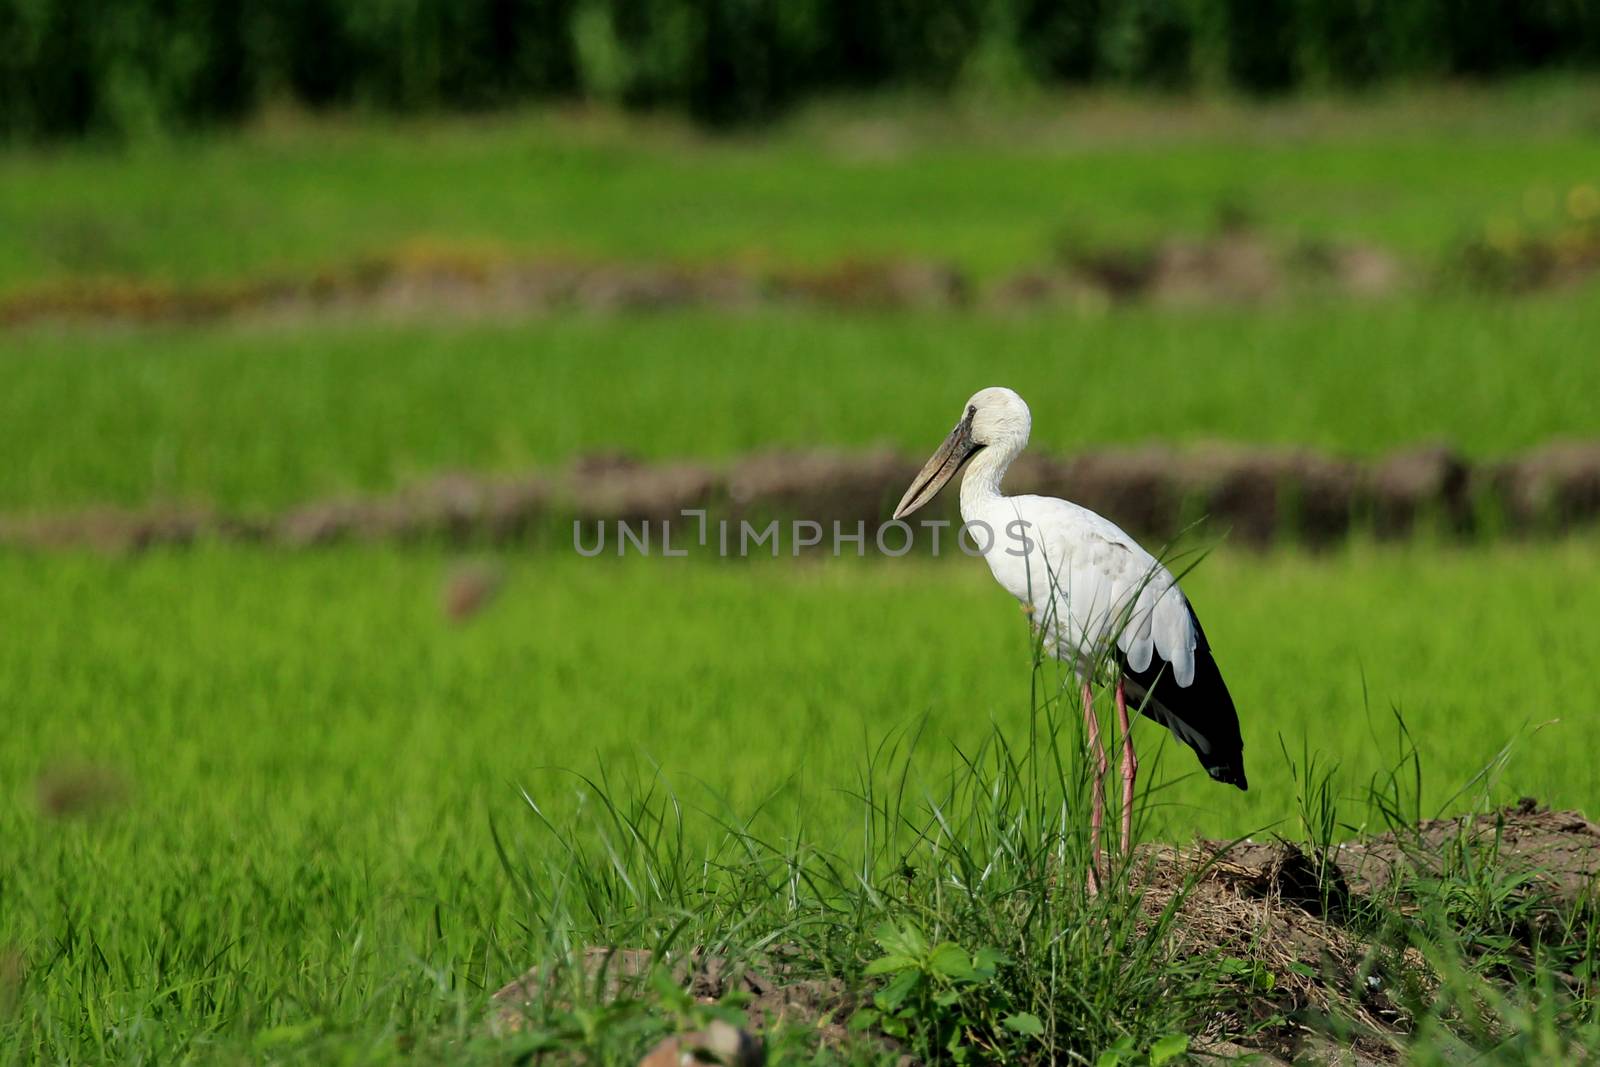 Image of stork on nature background